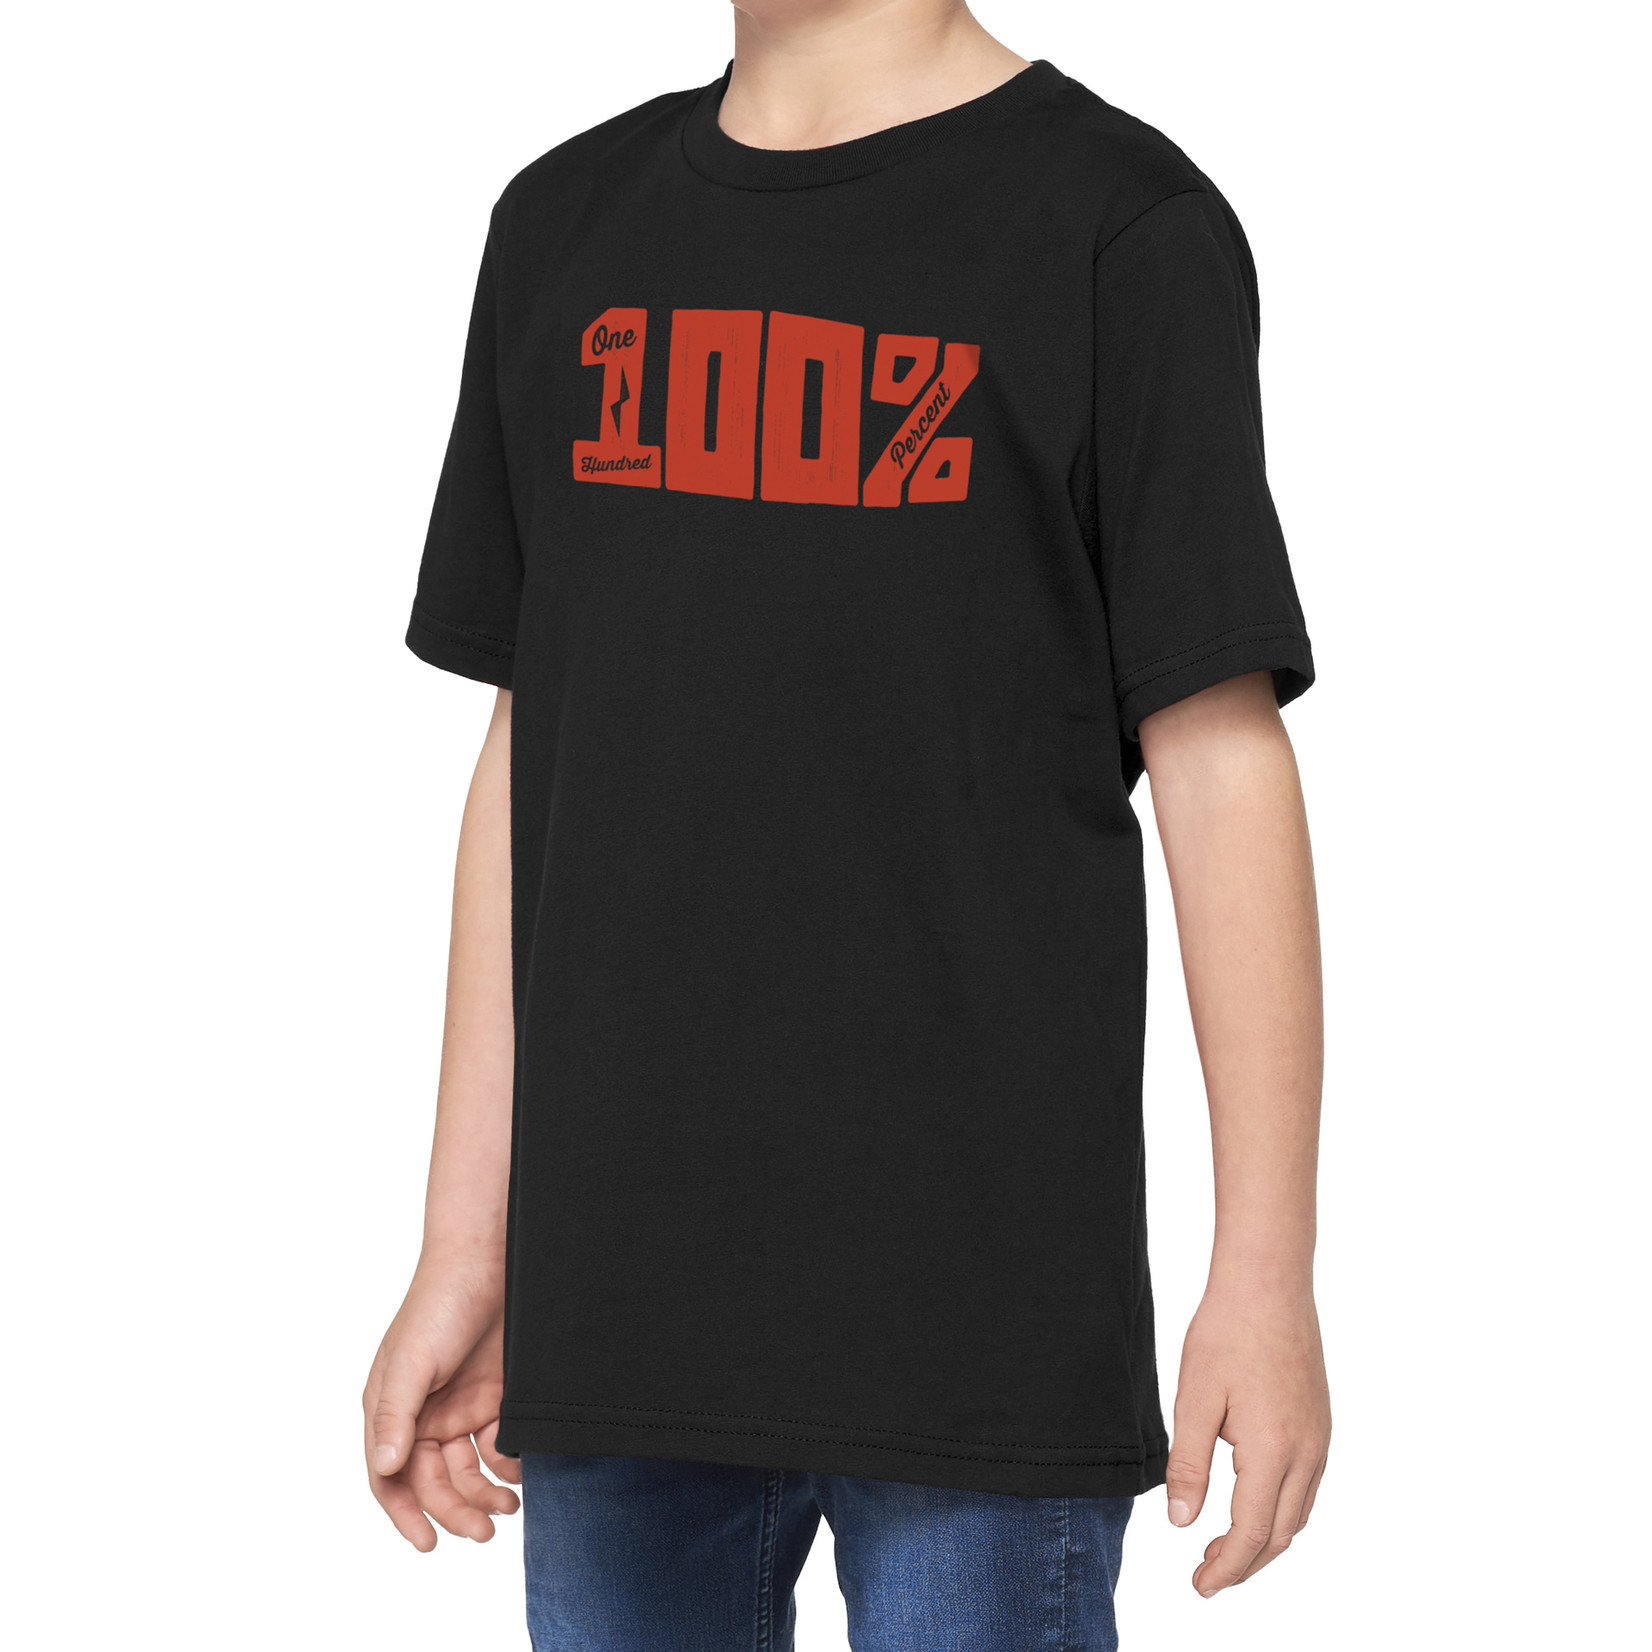 100% KURRI Youth Crewneck Comfort And Style T-Shirt - Black